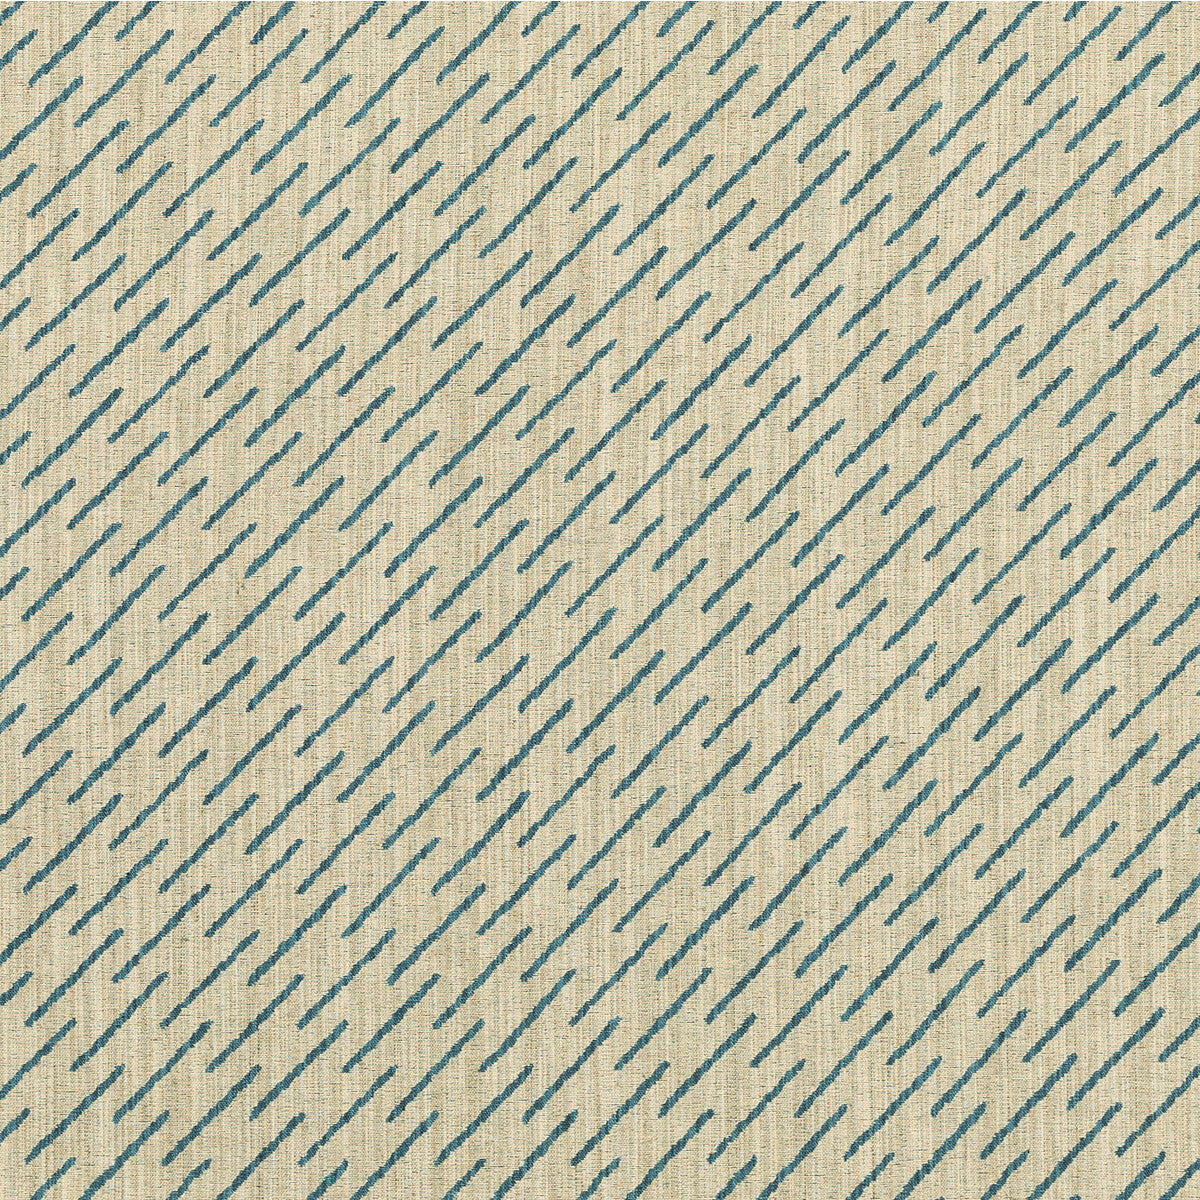 Esker Weave fabric in jadestone color - pattern GWF-3759.115.0 - by Lee Jofa Modern in the Kelly Wearstler VI collection